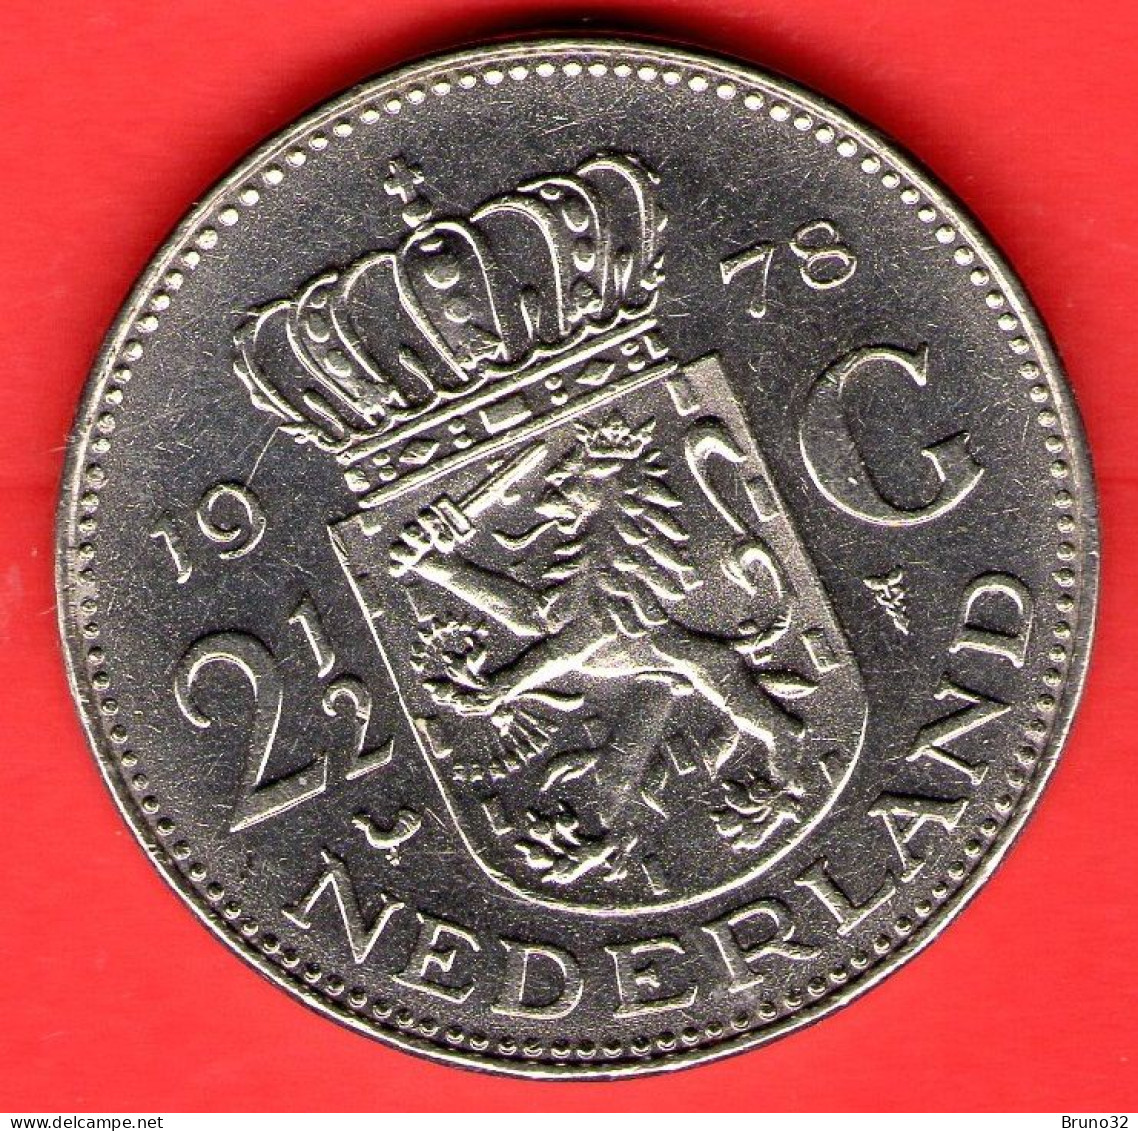 Paesi Bassi - Nederland - Pays Bas - 1978 - 2 1/2 Gulden - SPL/XF - Come Da Foto - 1948-1980 : Juliana